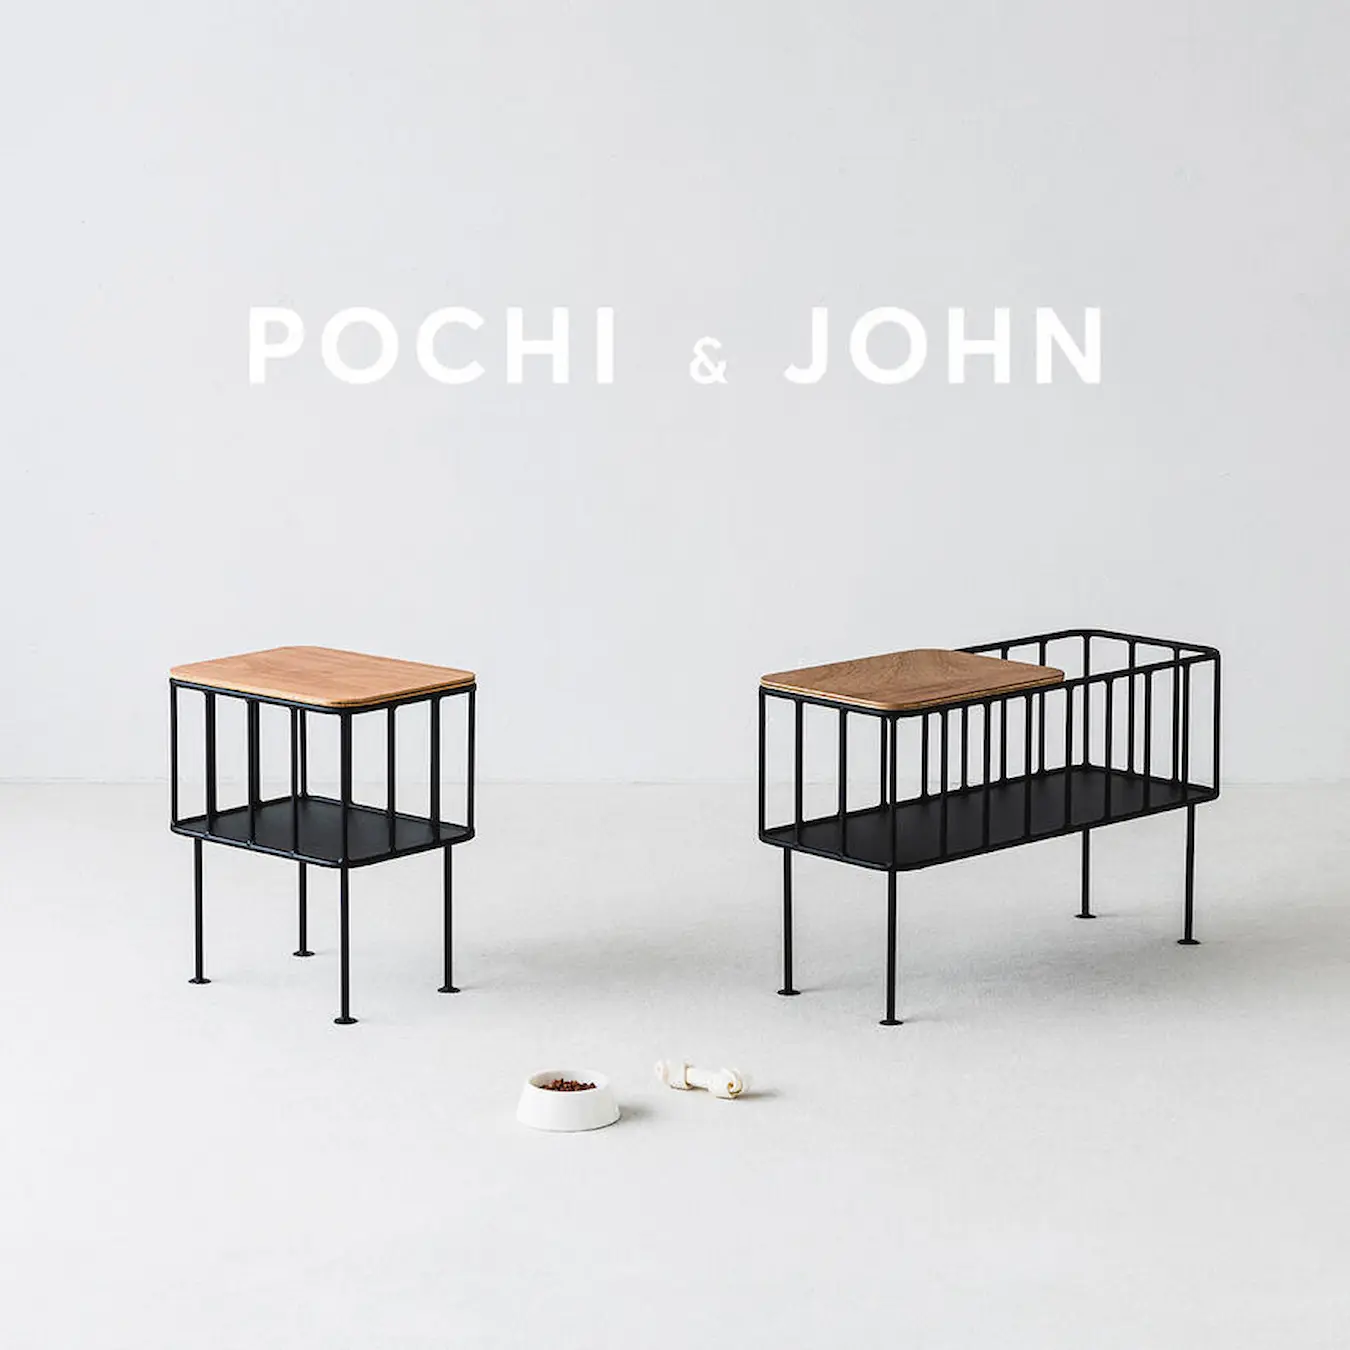 POCHI & JOHN